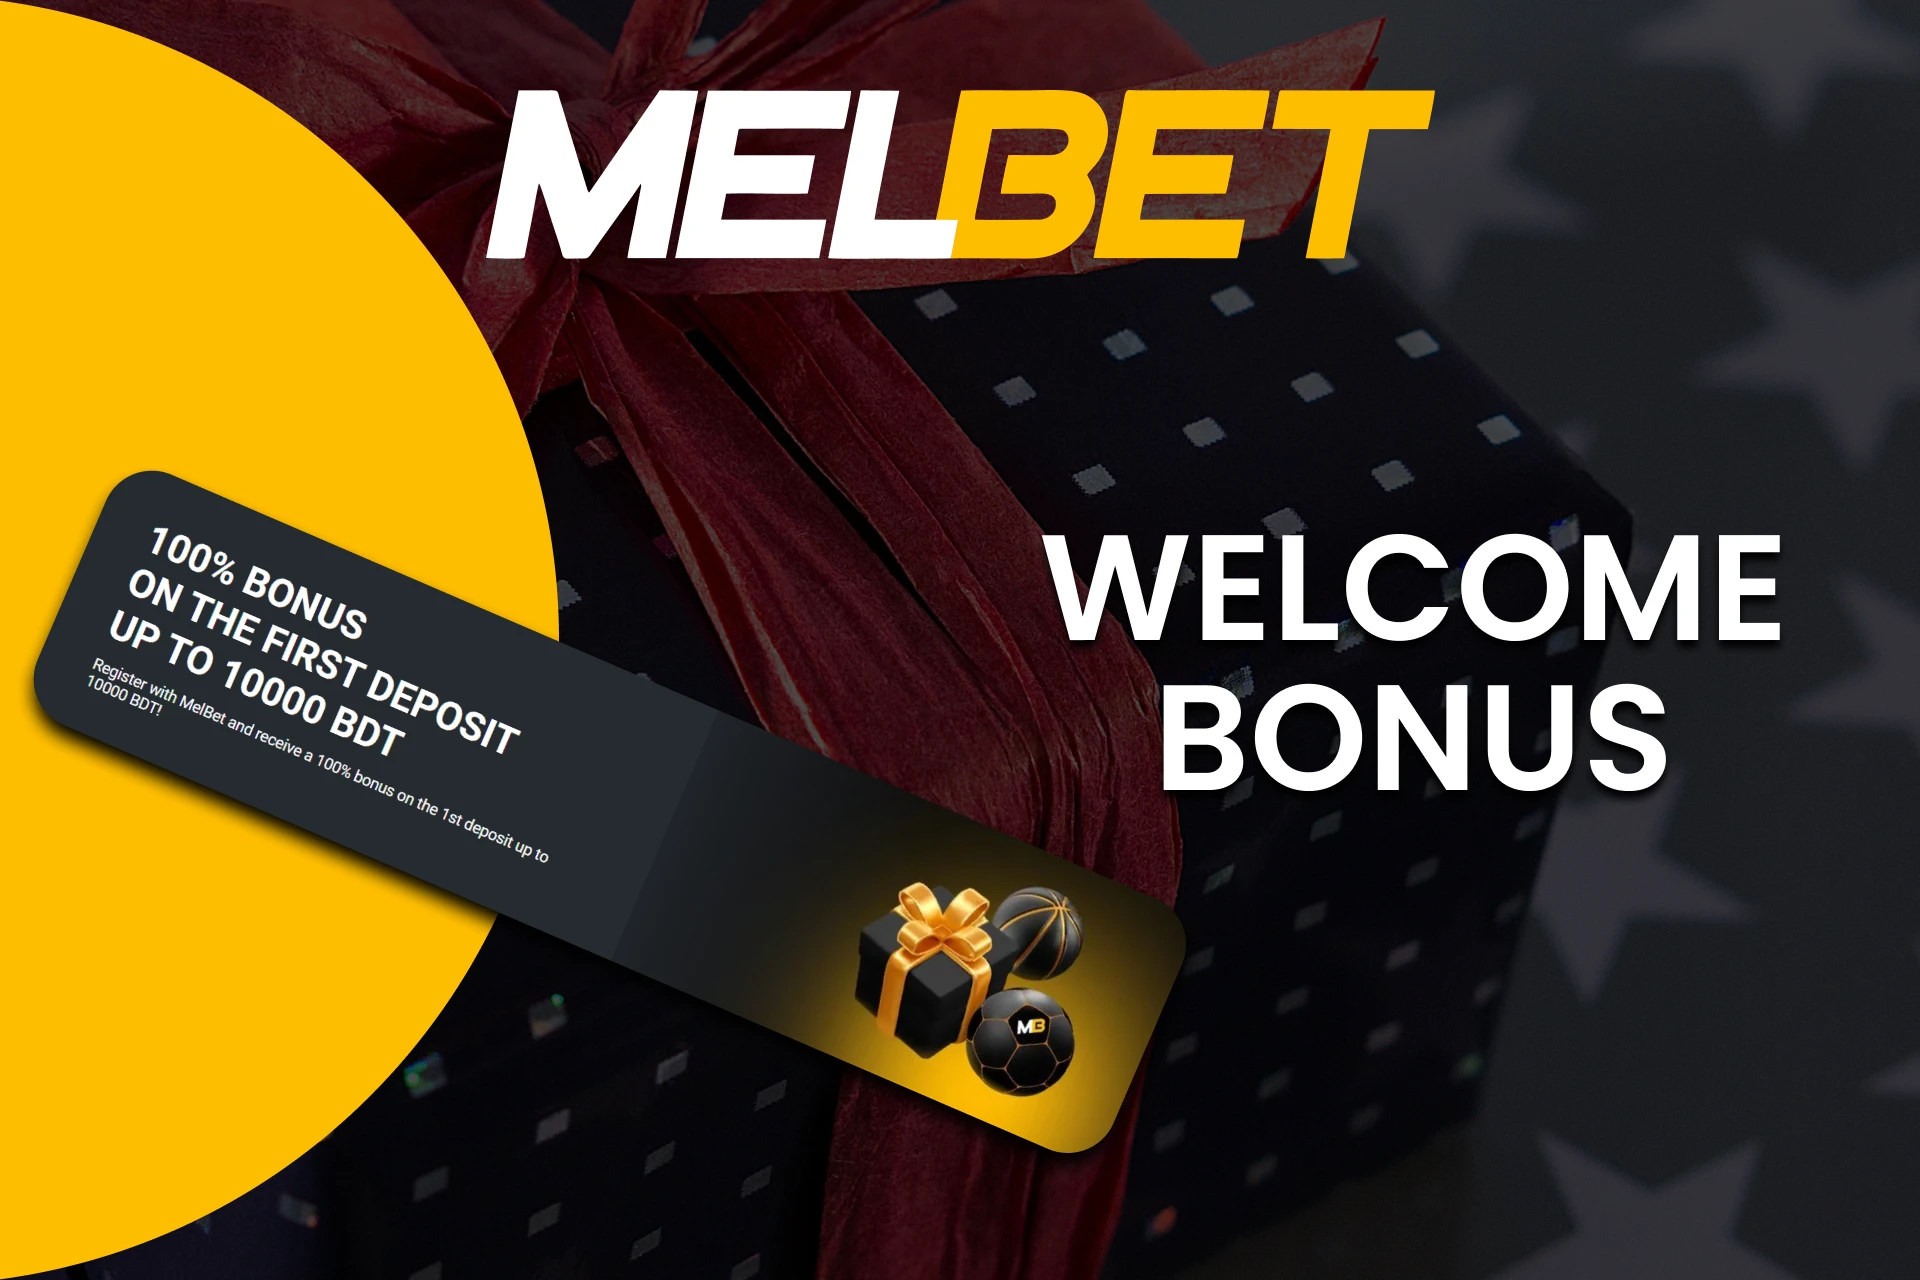 Melbet gives bonuses for betting on basketball.